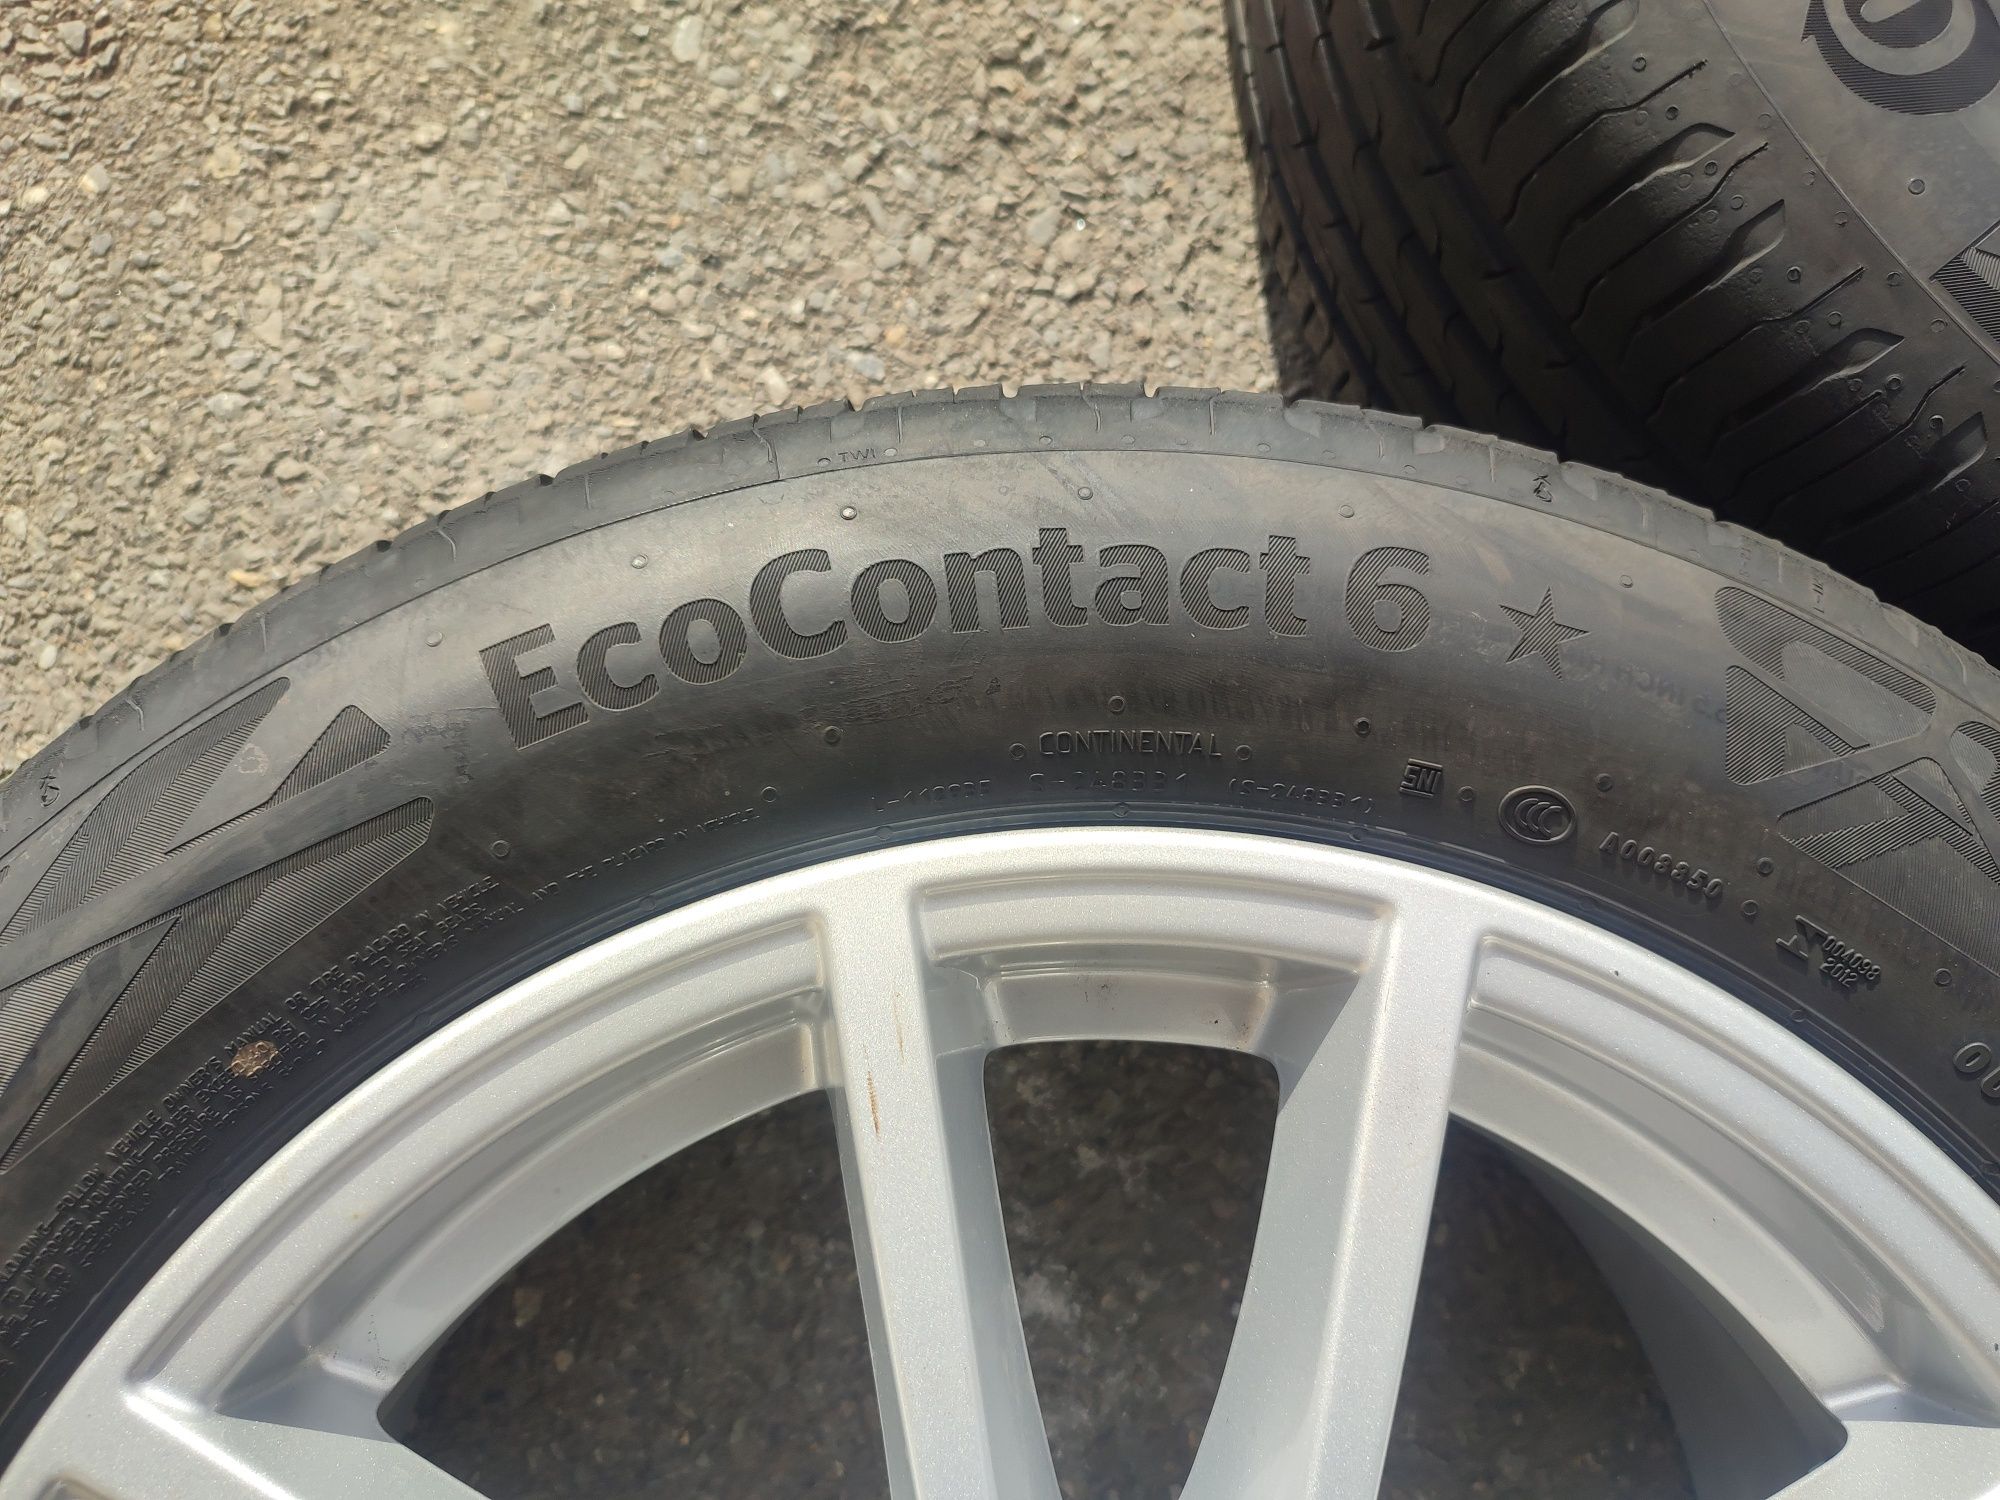 225/55/17" 4бр Continental eco contact 6,dot2819,6-7mm